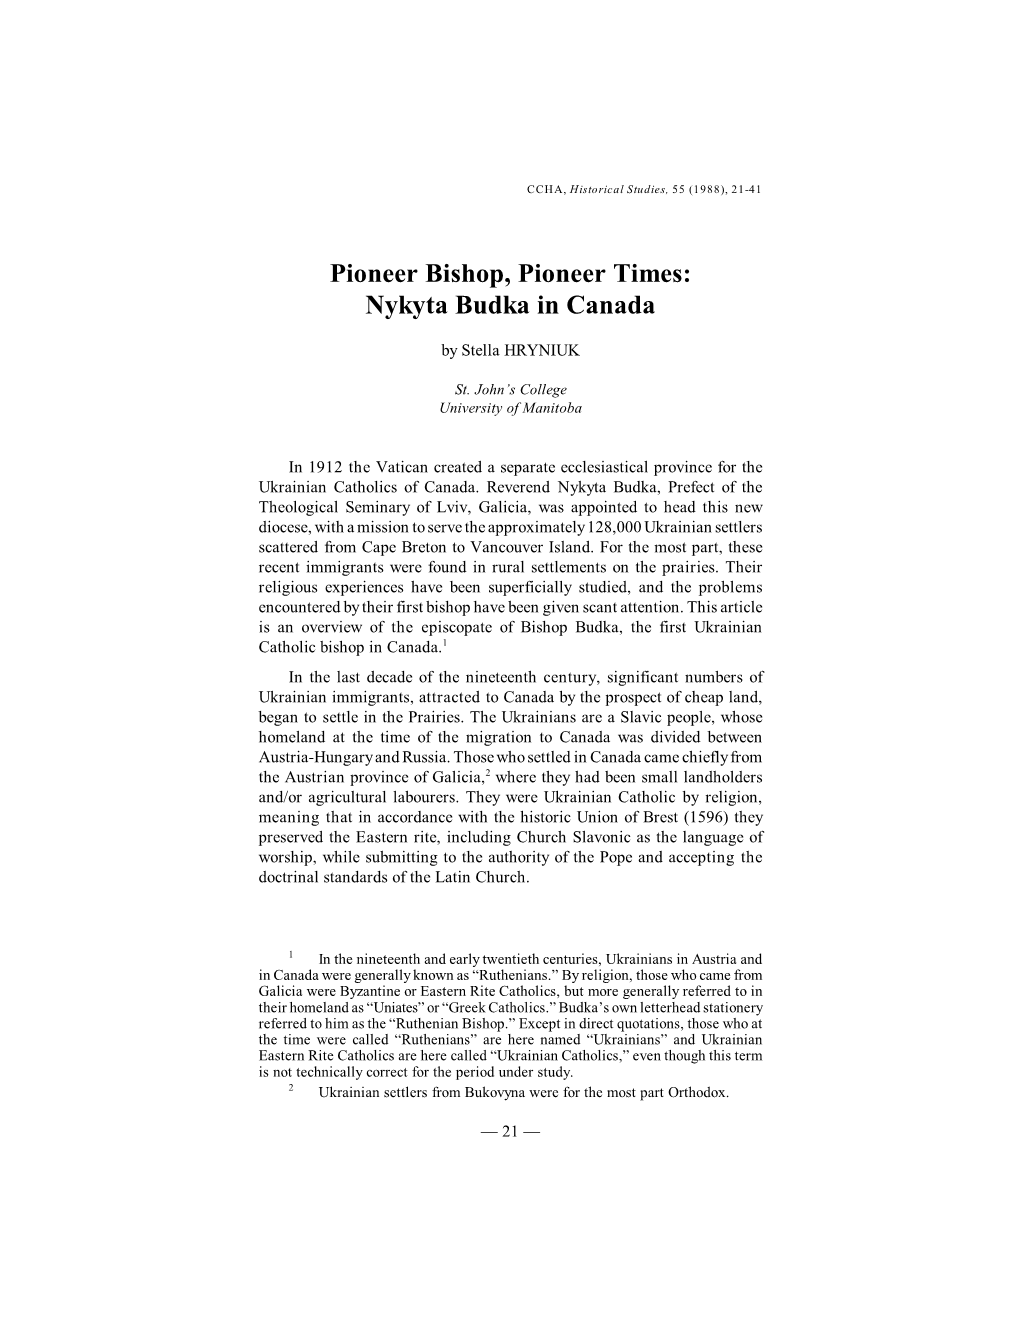 Pioneer Bishop, Pioneer Times: Nykyta Budka in Canada